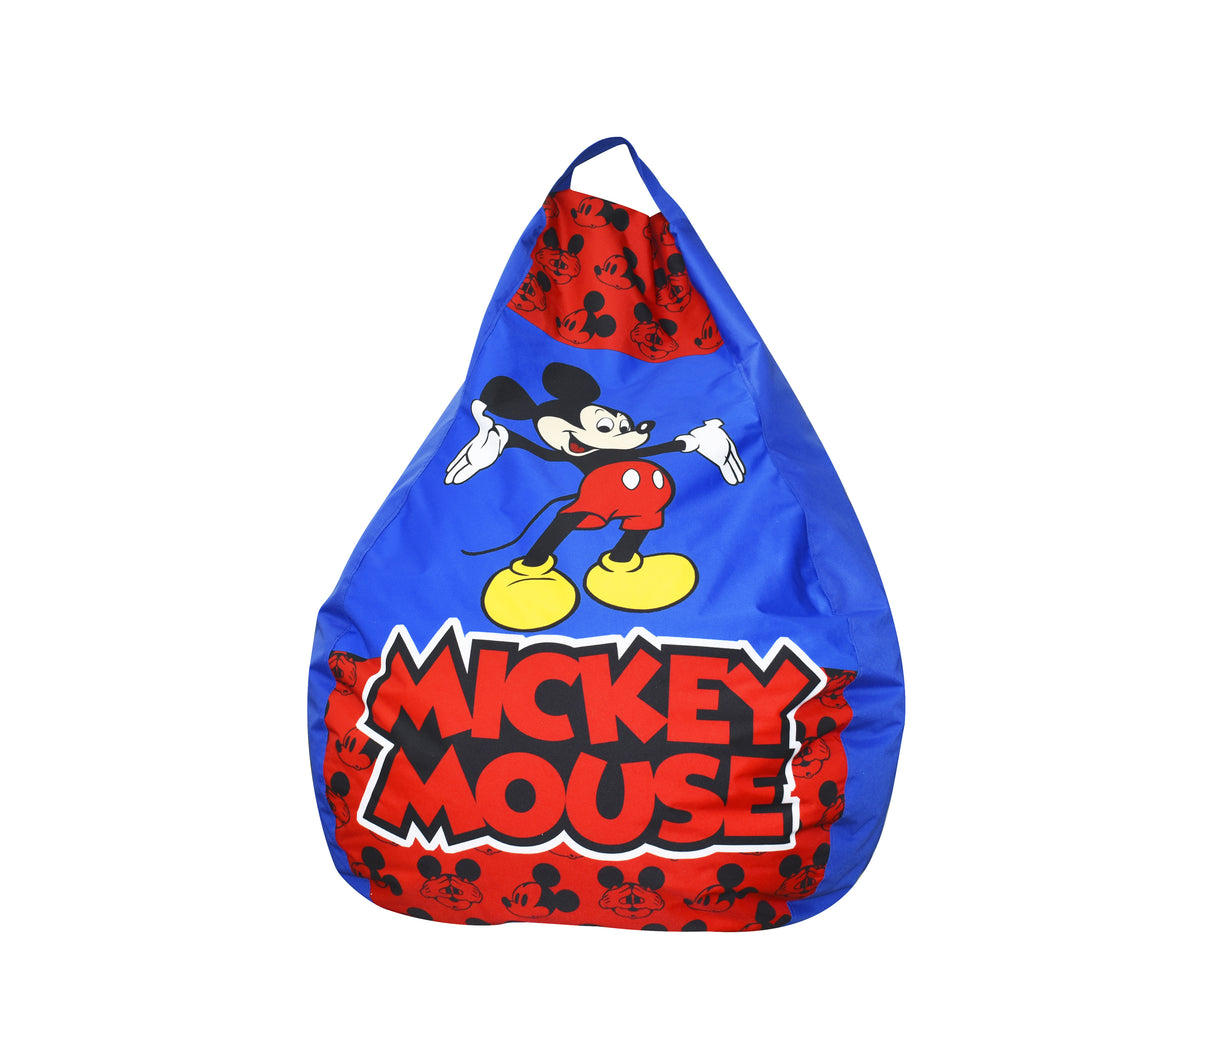 Puff lagrima en lona infantil sublimado azul/rojo Mickey Mouse Powerfik